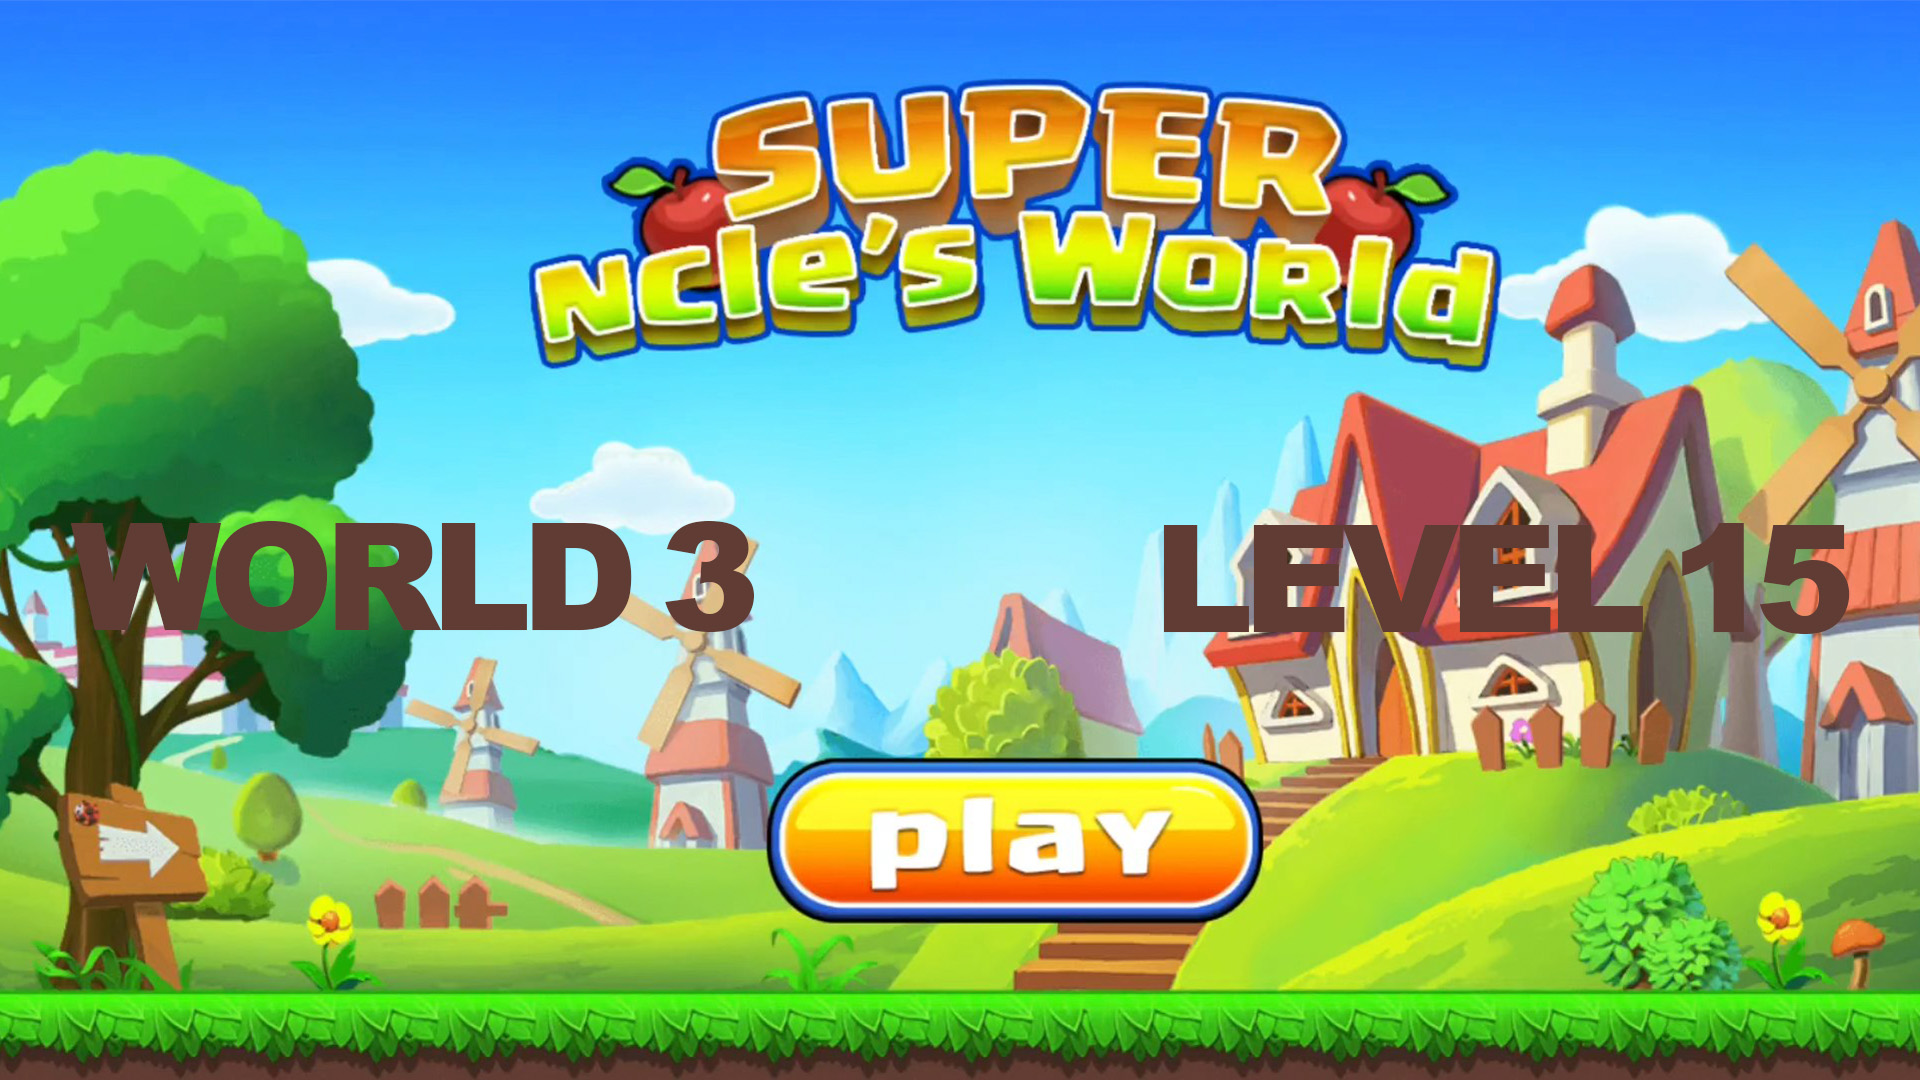 Super ncle's  World 3. Level 15.